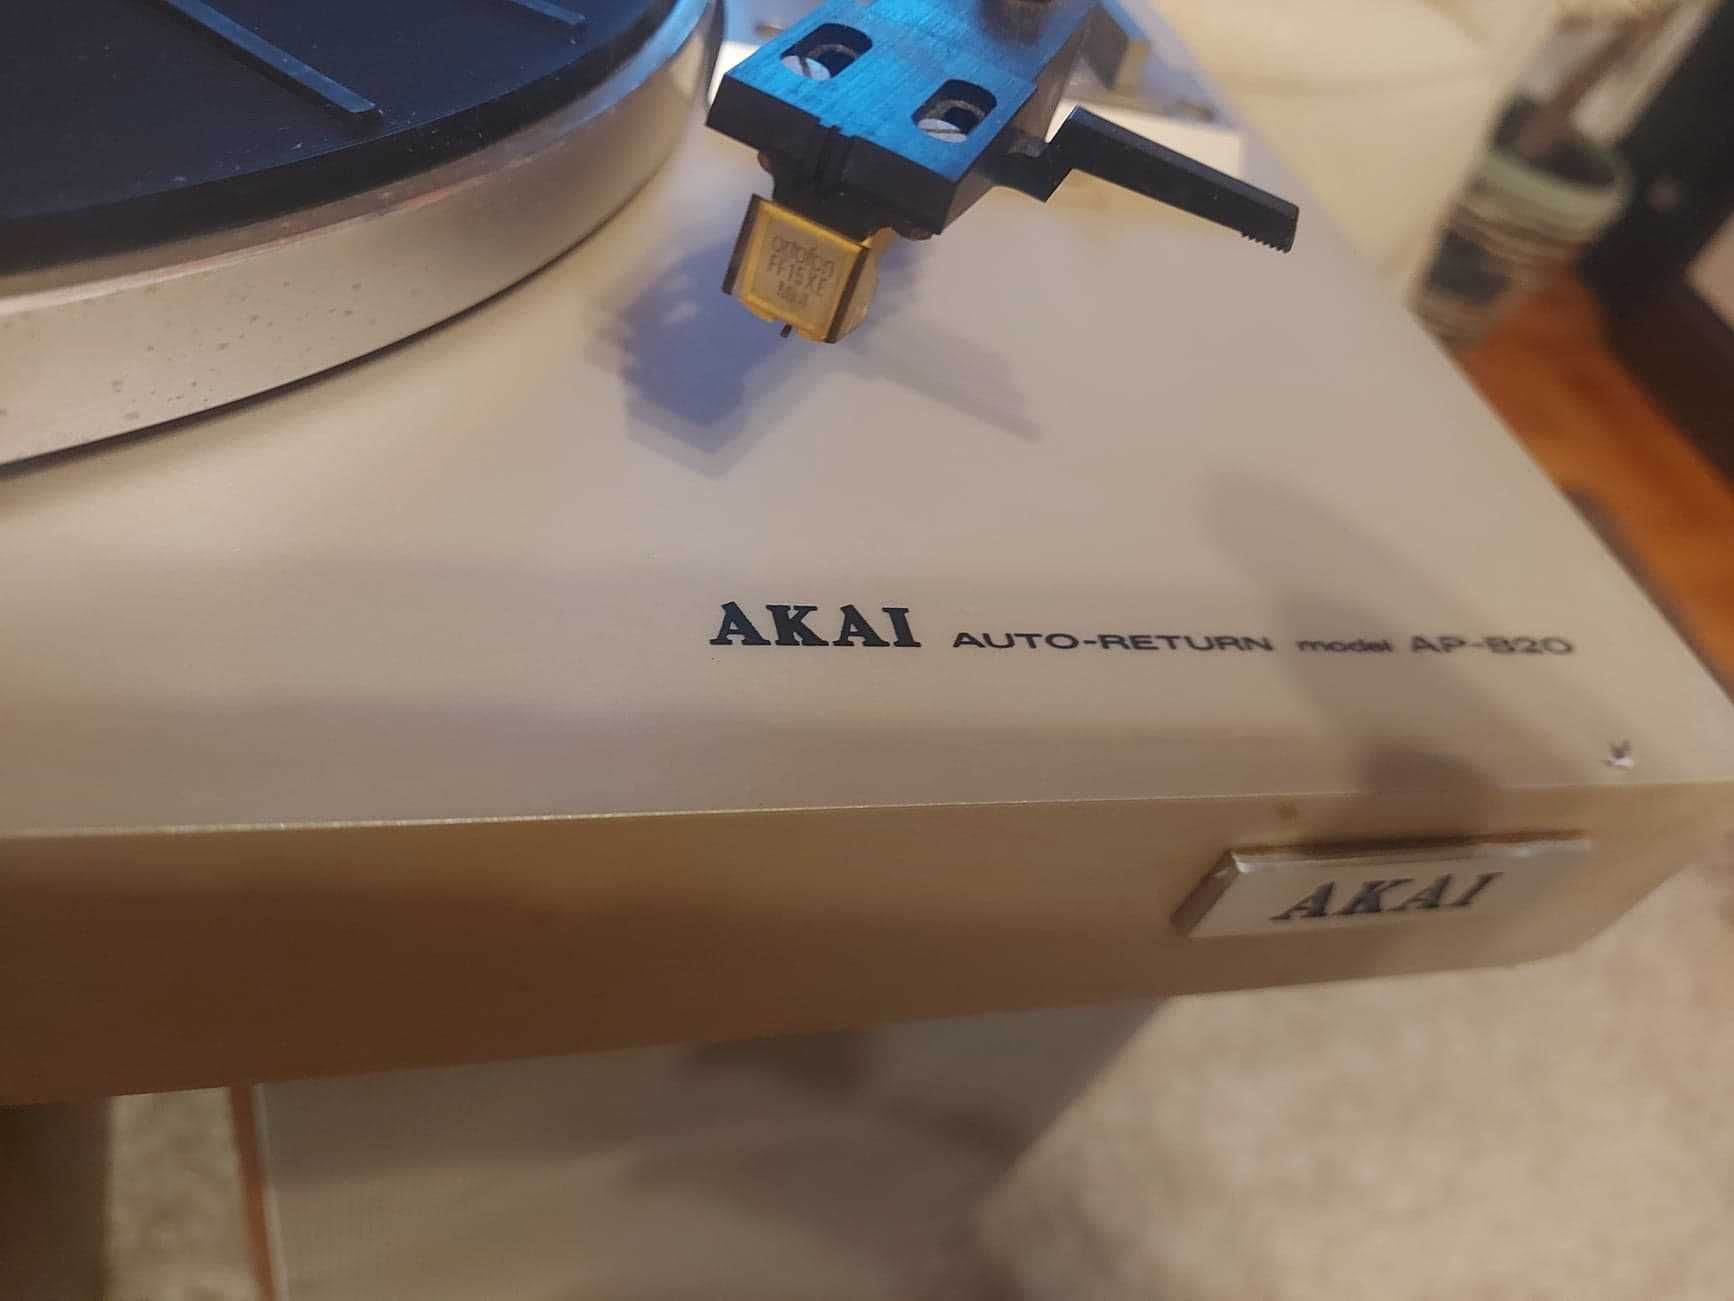 AKAI AP-B20 - Auto-Return Stereo Turntable